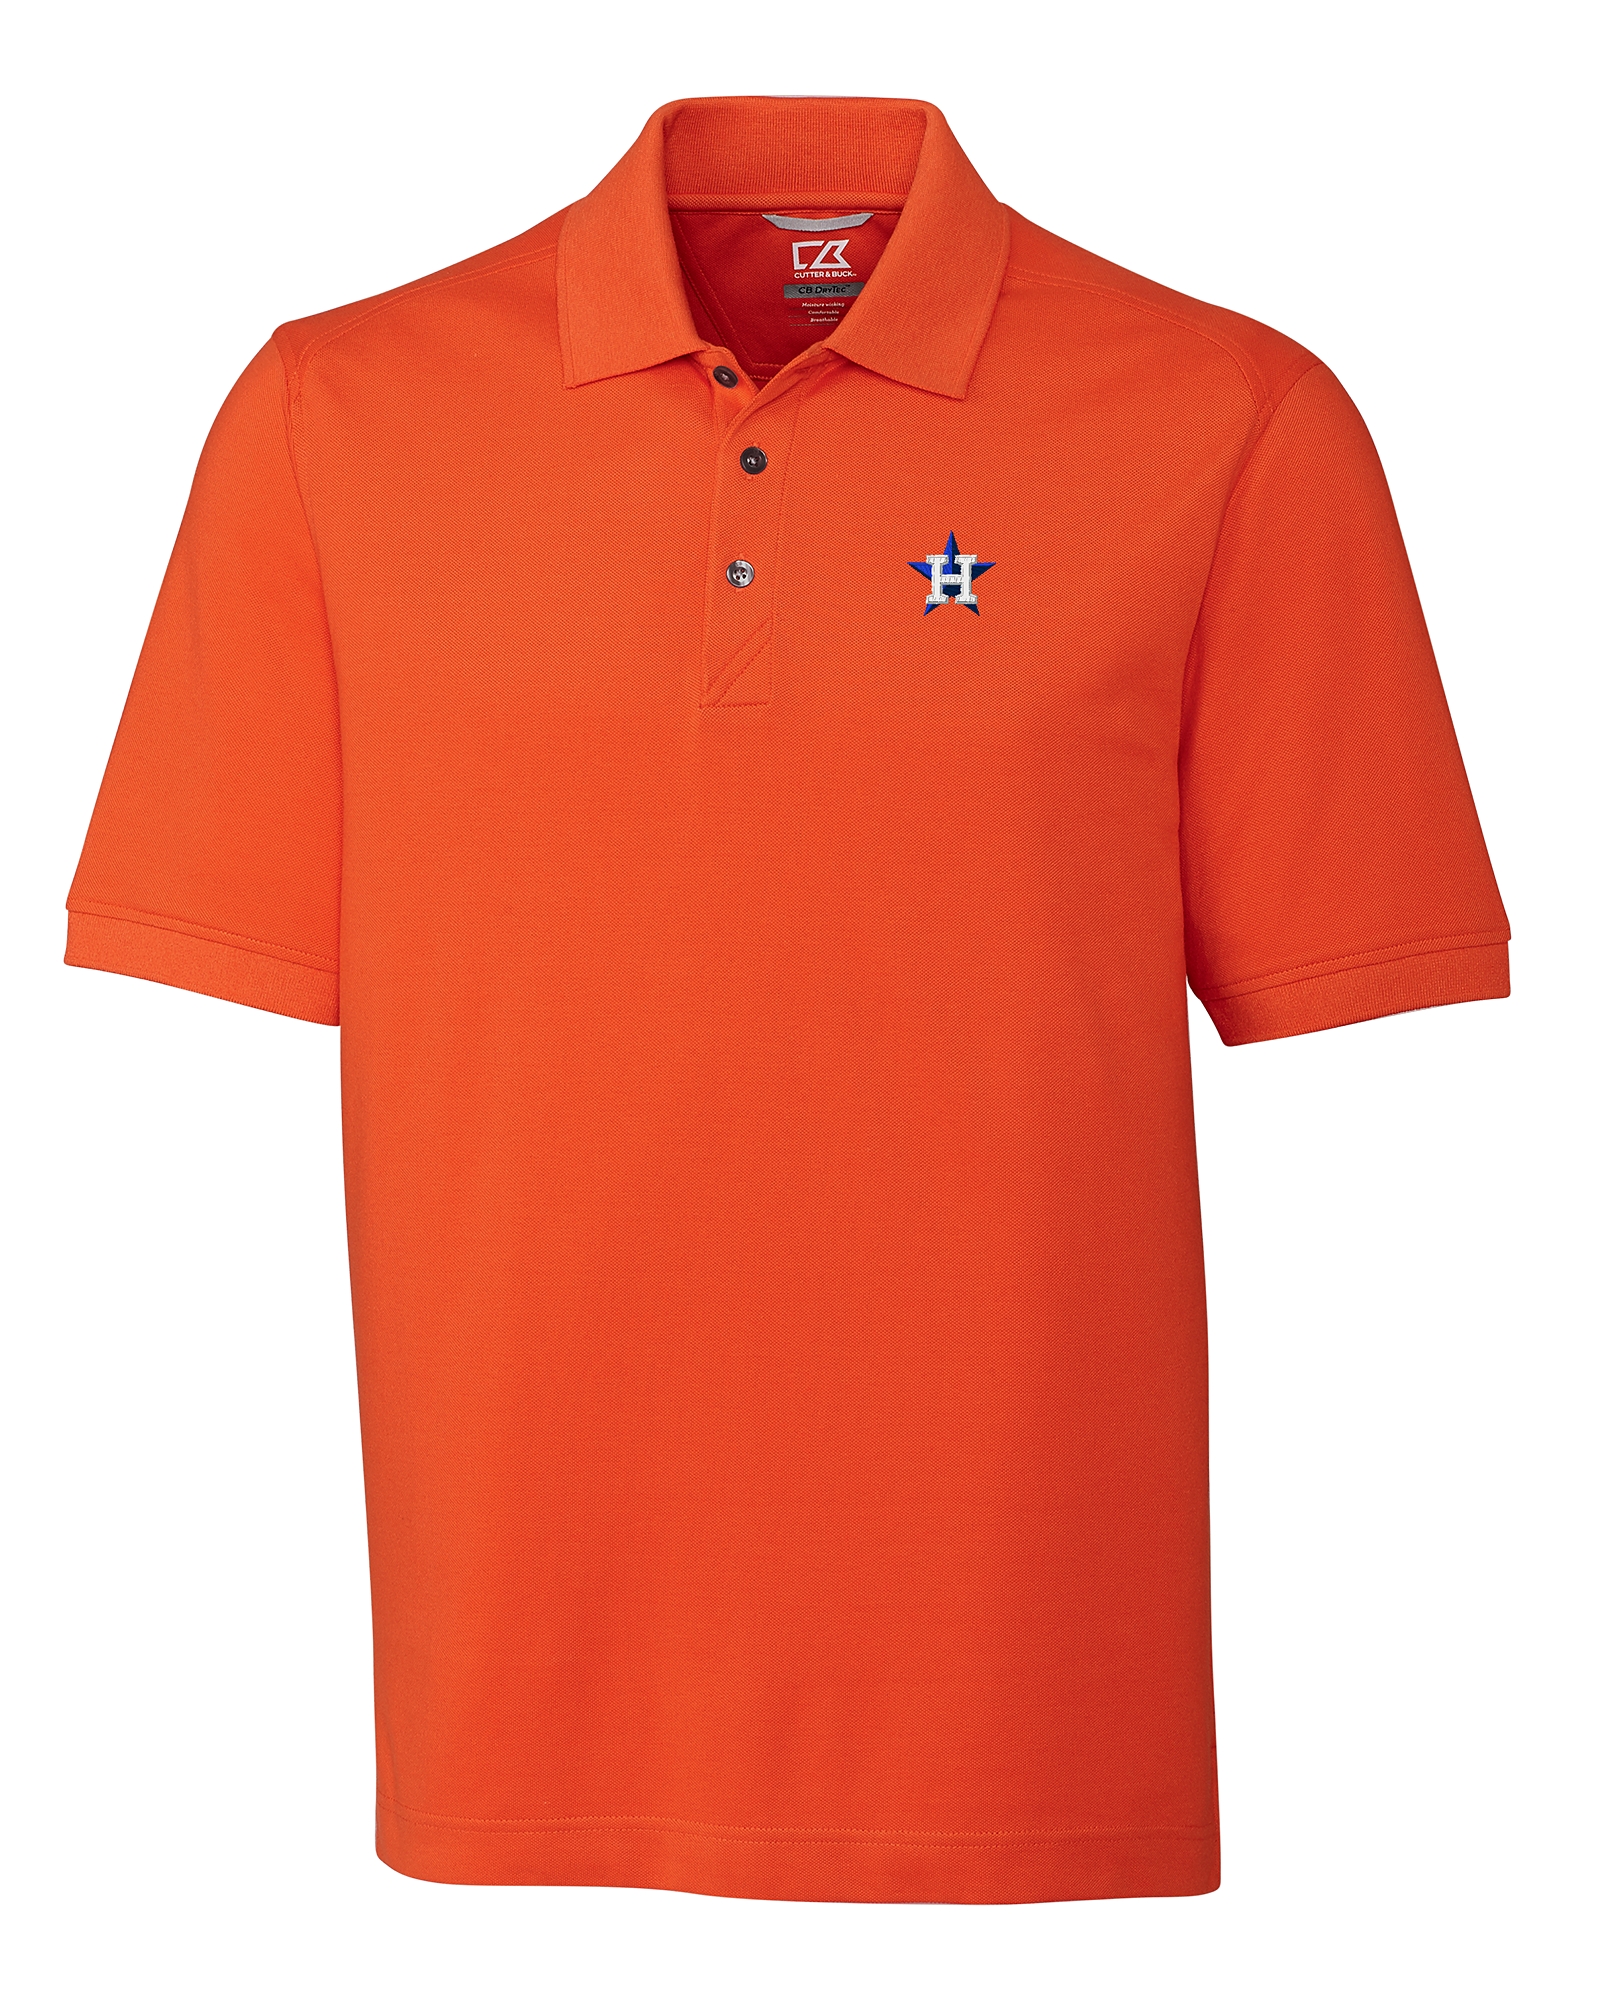 Under Armour Orange Astros Shirt, Size Small